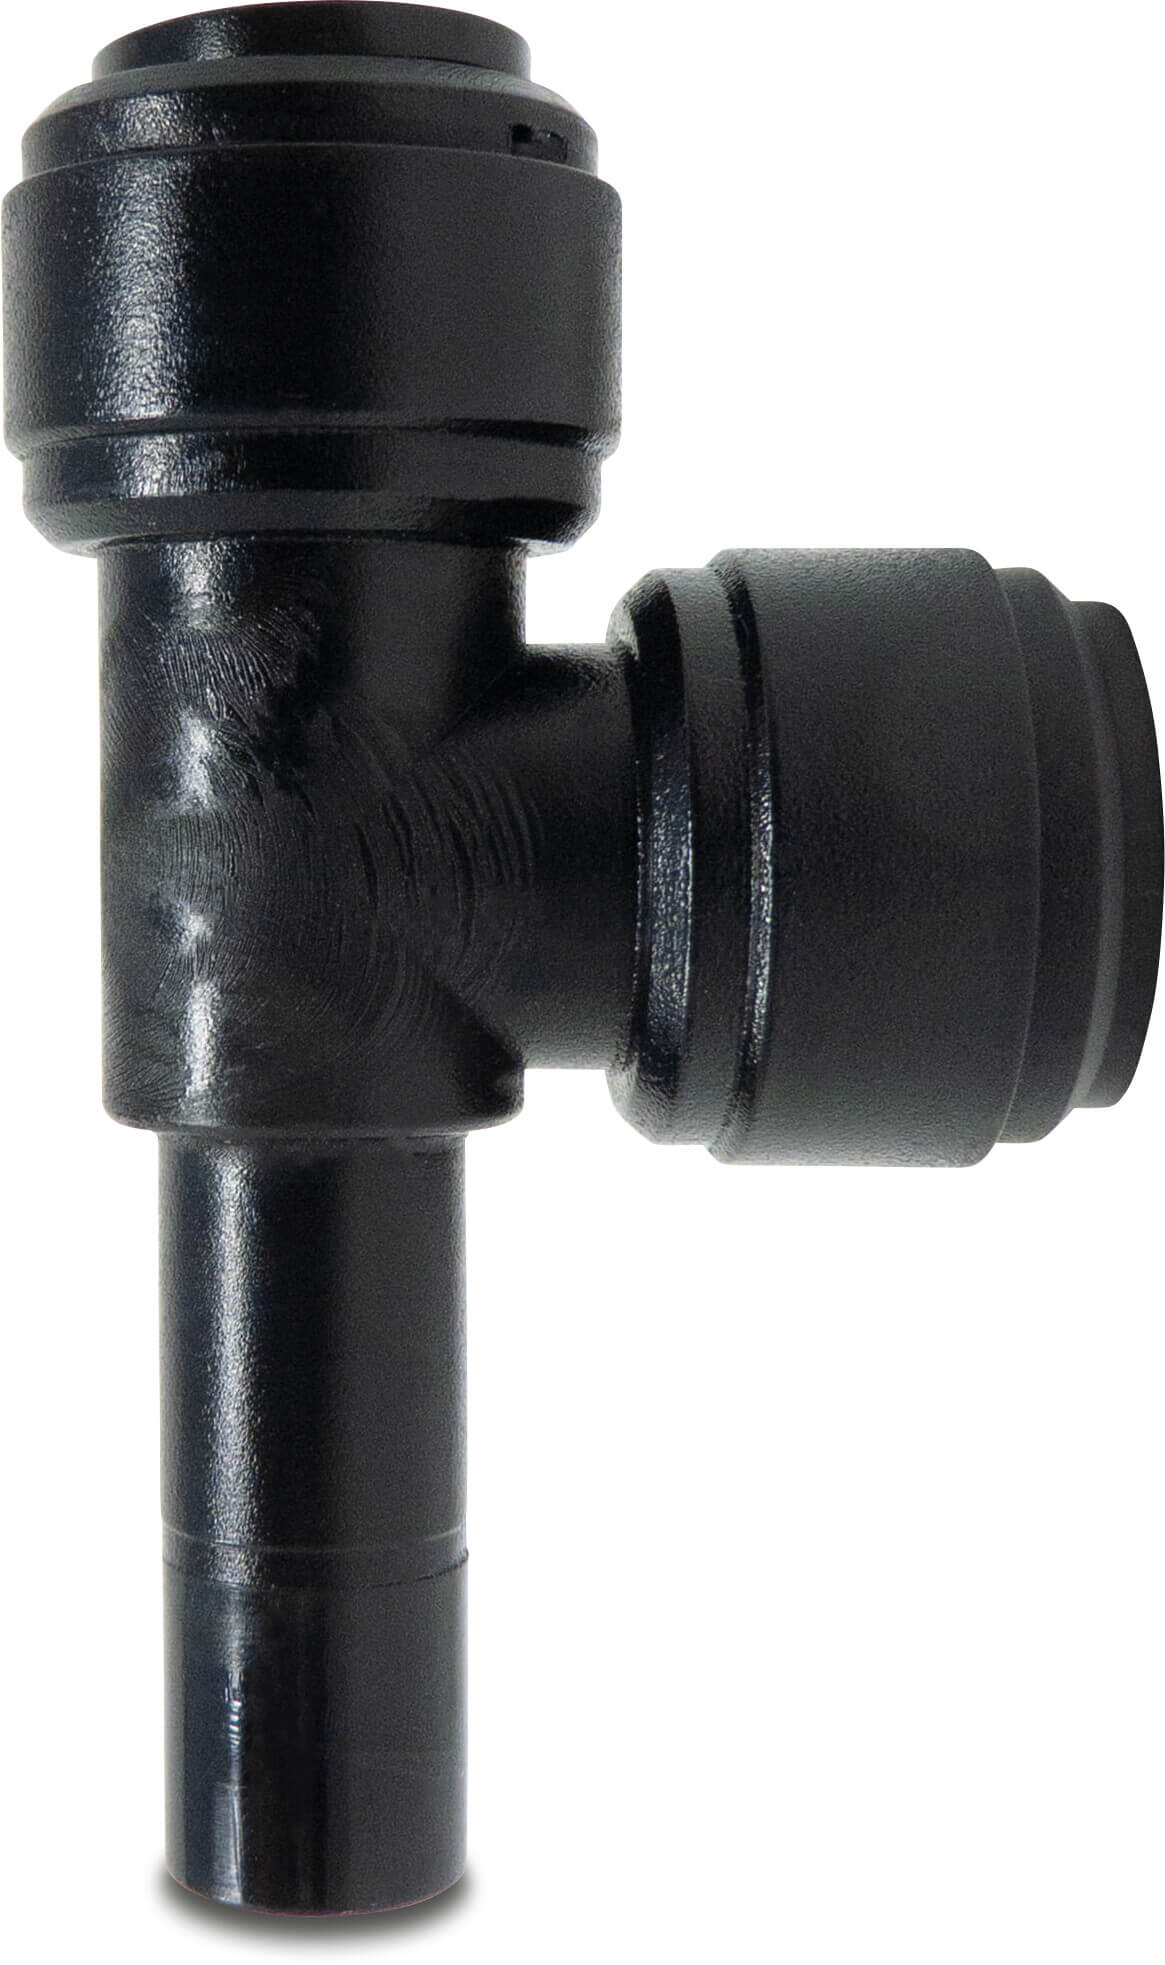 Adaptor T-piece 90° POM 4 mm spigot x push-in x push-in 20bar black WRAS type Aquaspeed